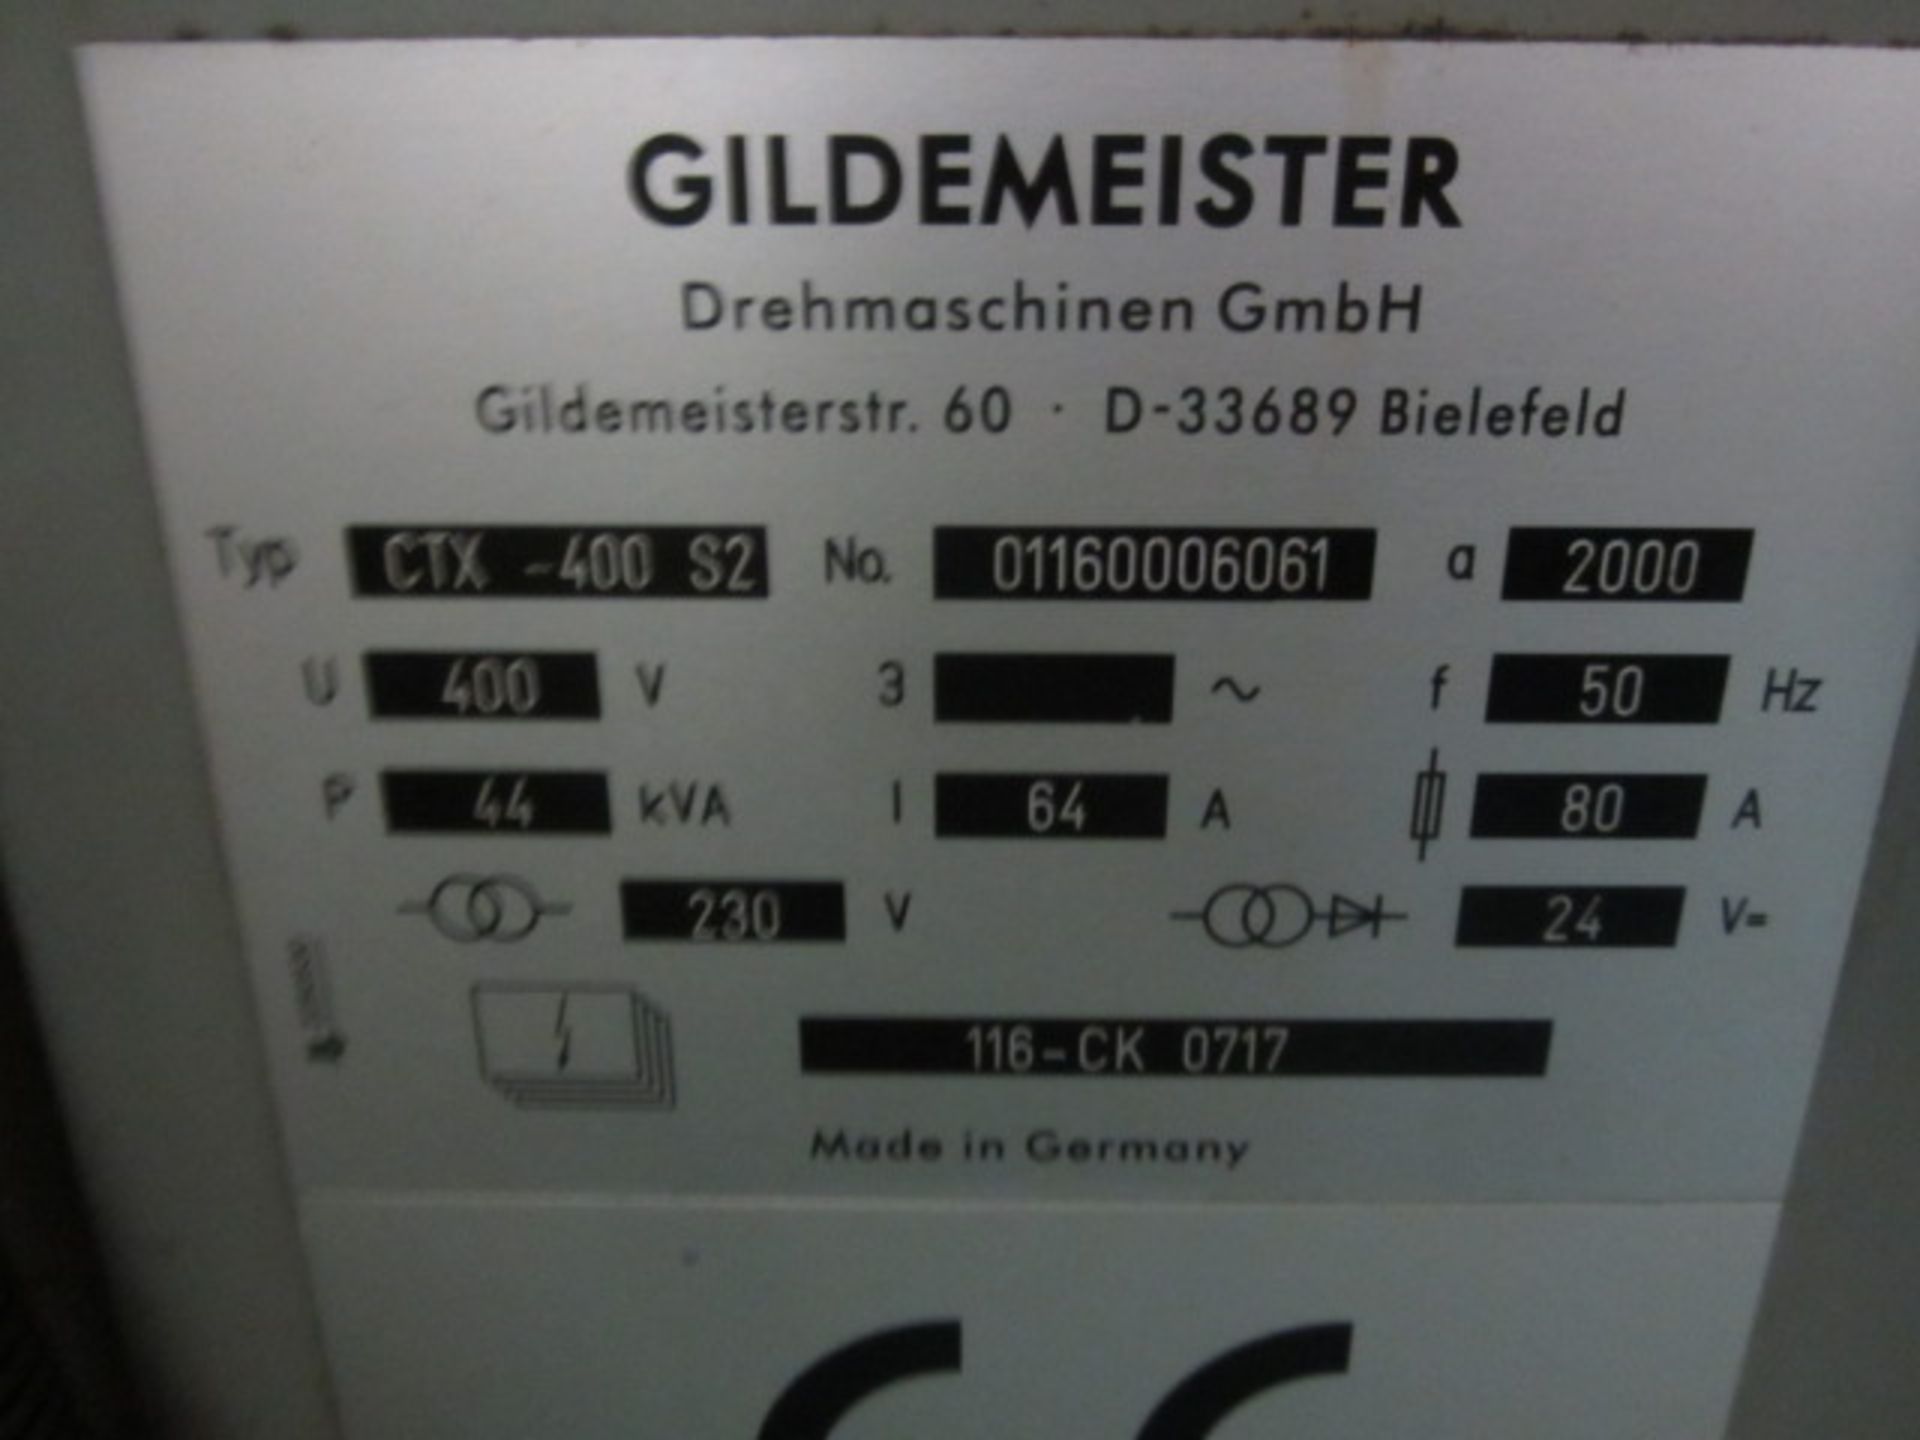 Gildemeister CTX400-52 slant bed CNC turning centre, serial no: 011600006061, Heidenhain CNC pilot - Image 6 of 6